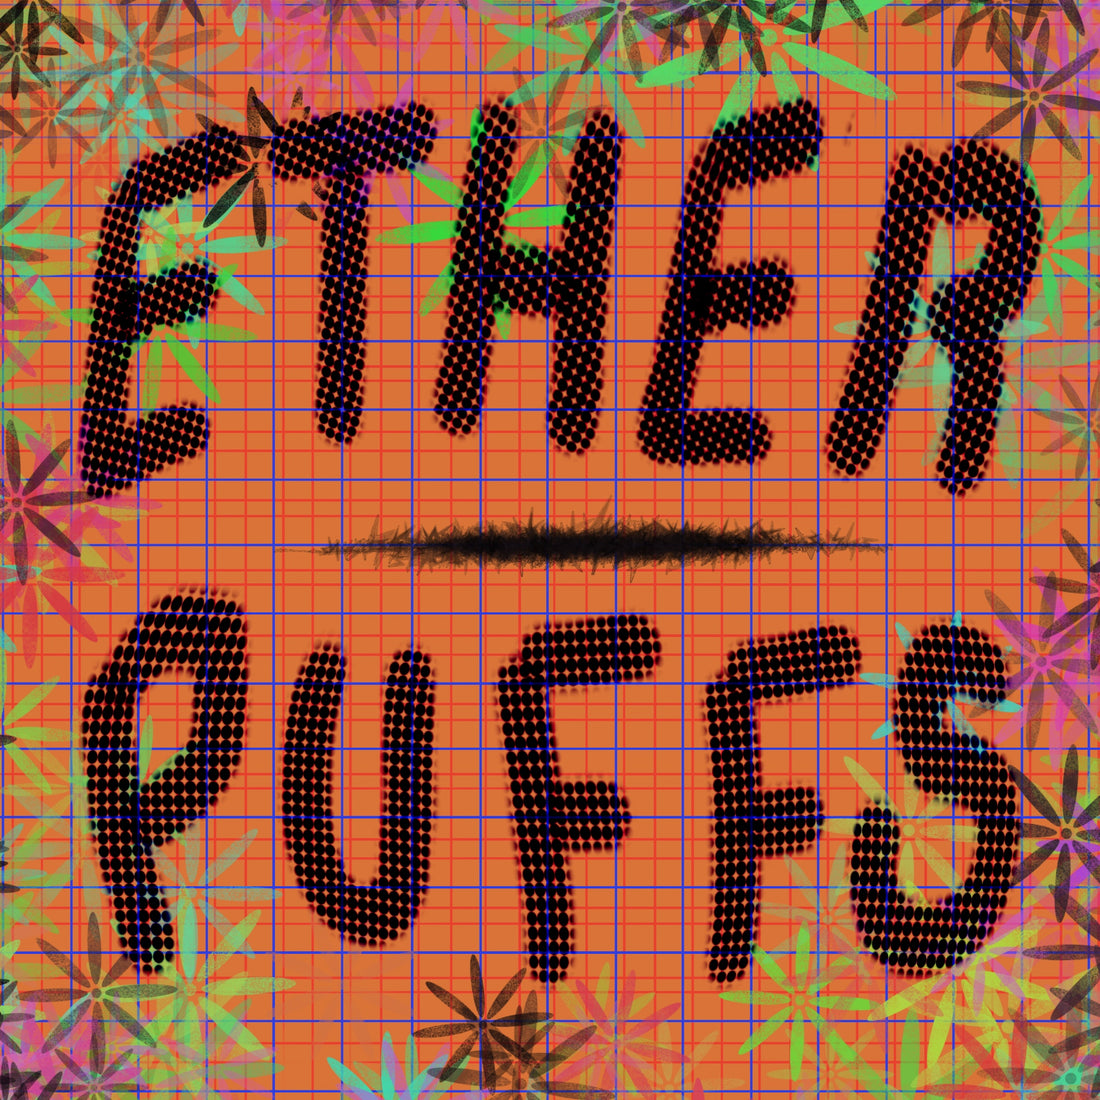 Ether Puffs